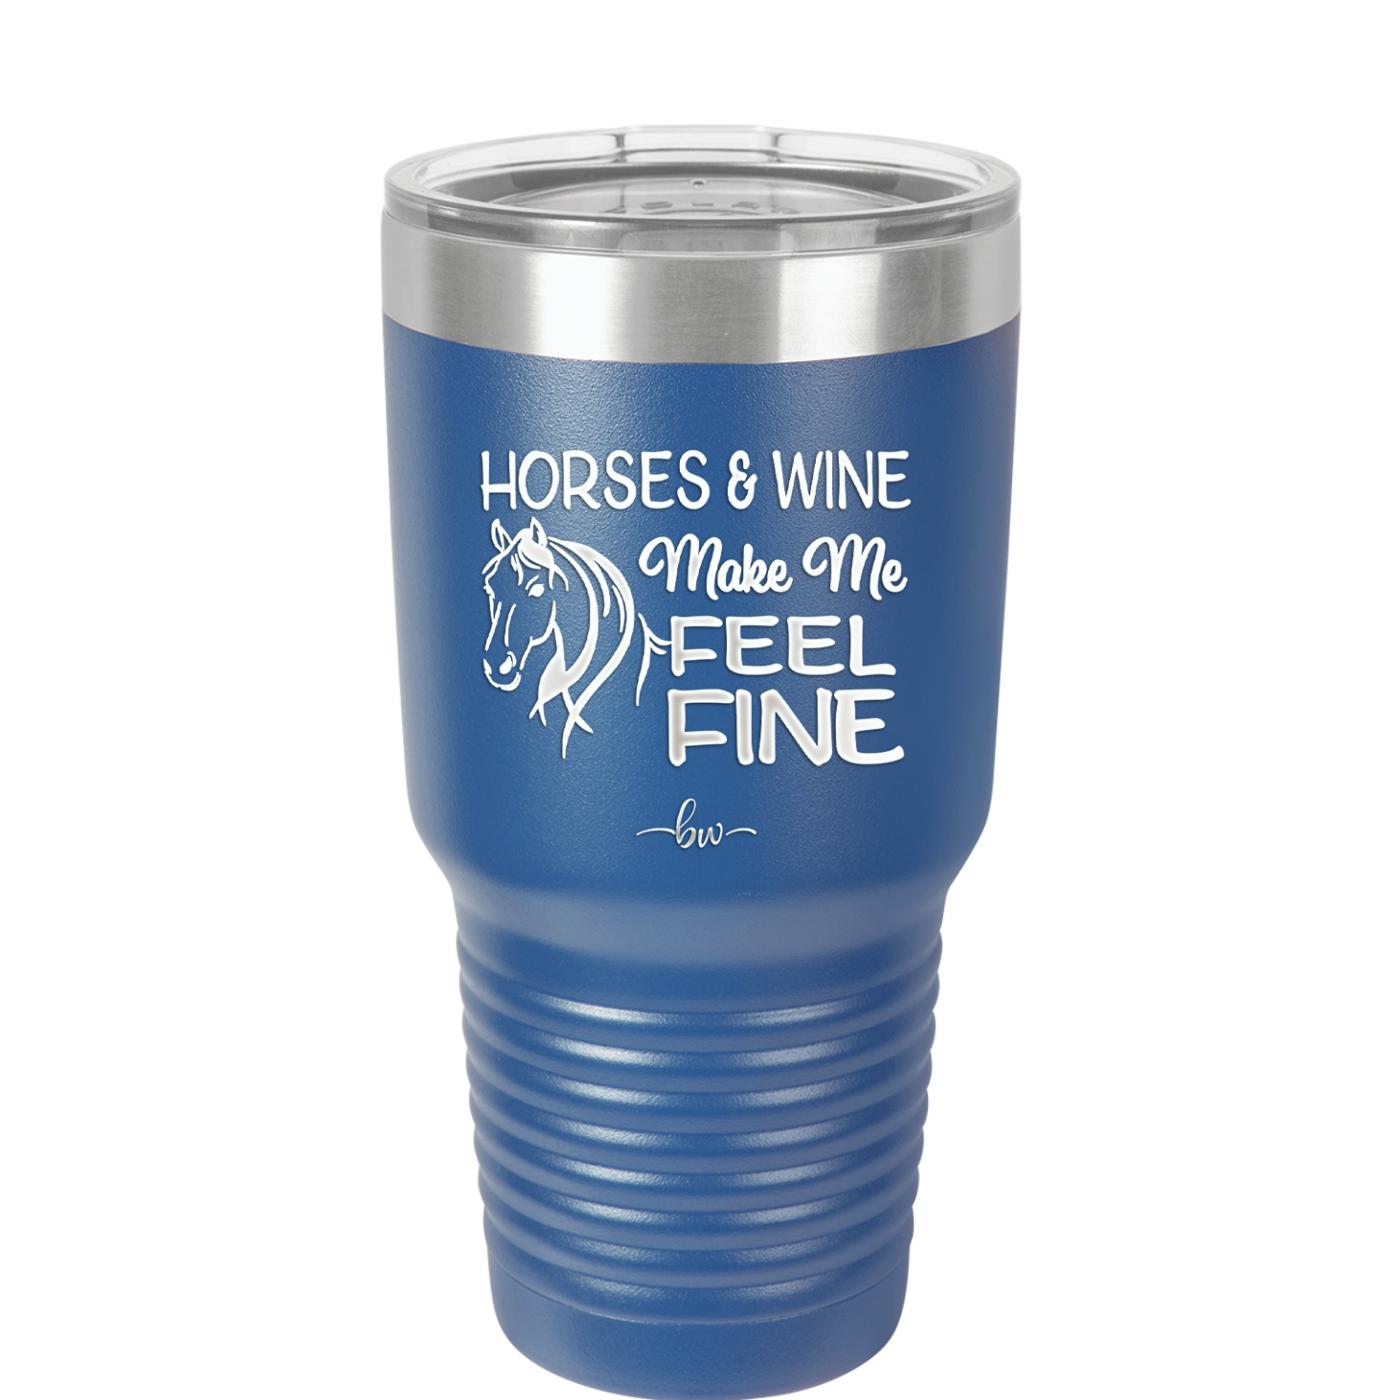 Horses and Wine Make Me Feel Fine - Laser Engraved Stainless Steel Drinkware - 1036 -